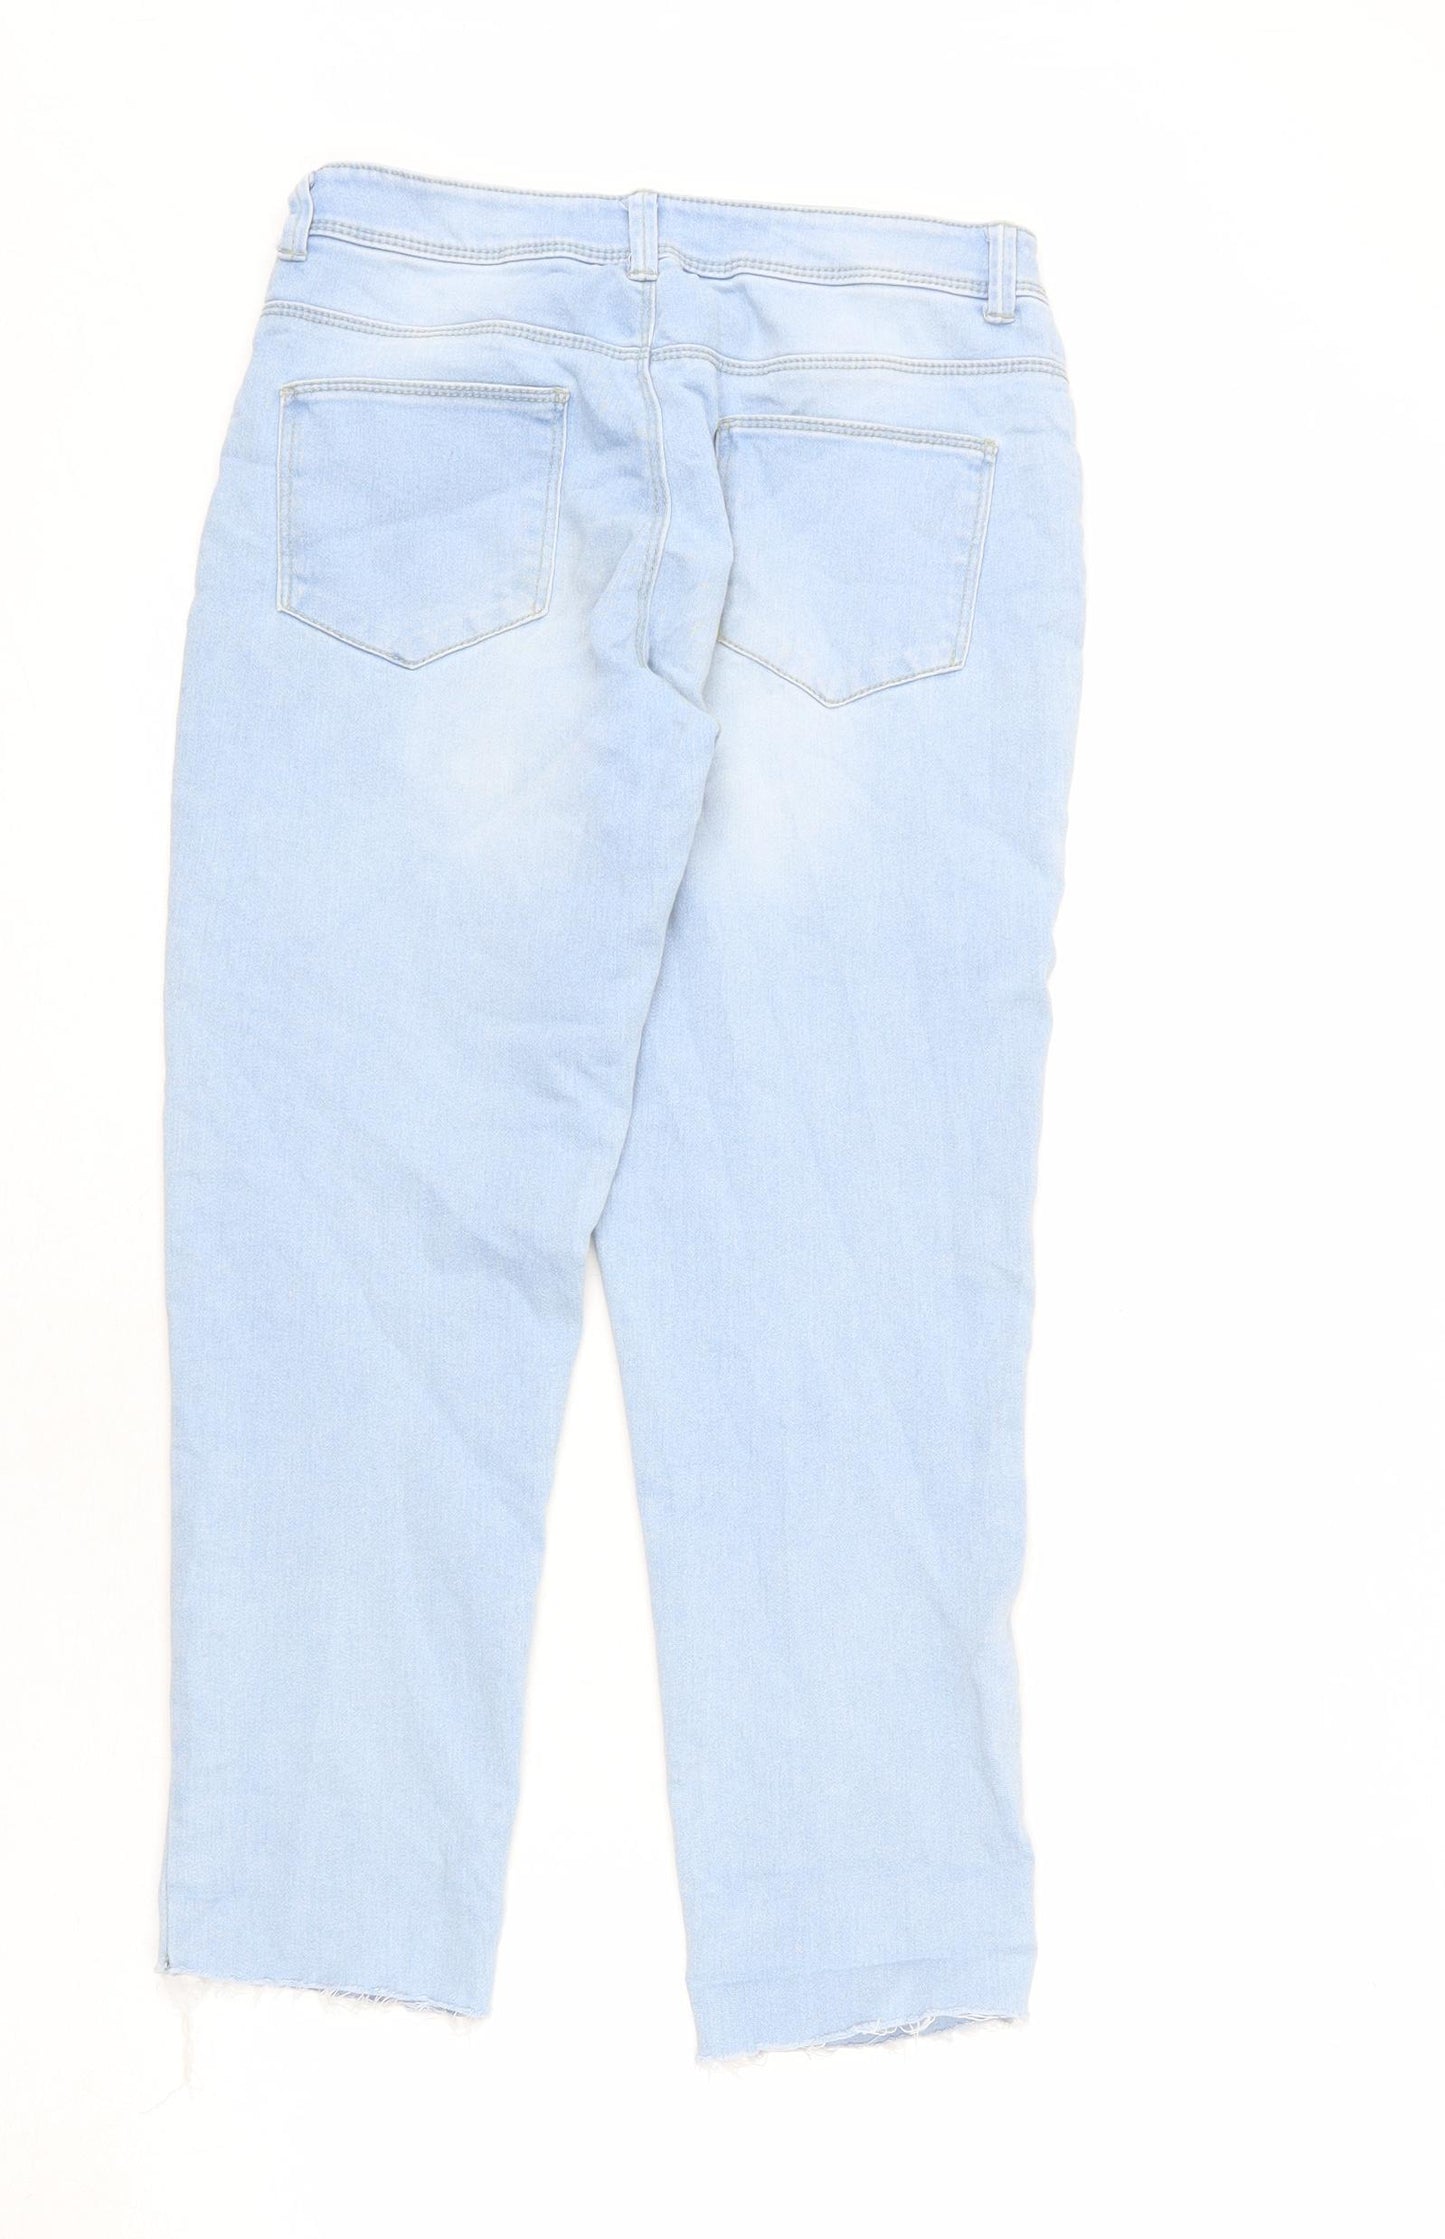 Denim & Co. Womens Blue Cotton Cropped Jeans Size 10 L24 in Regular Zip